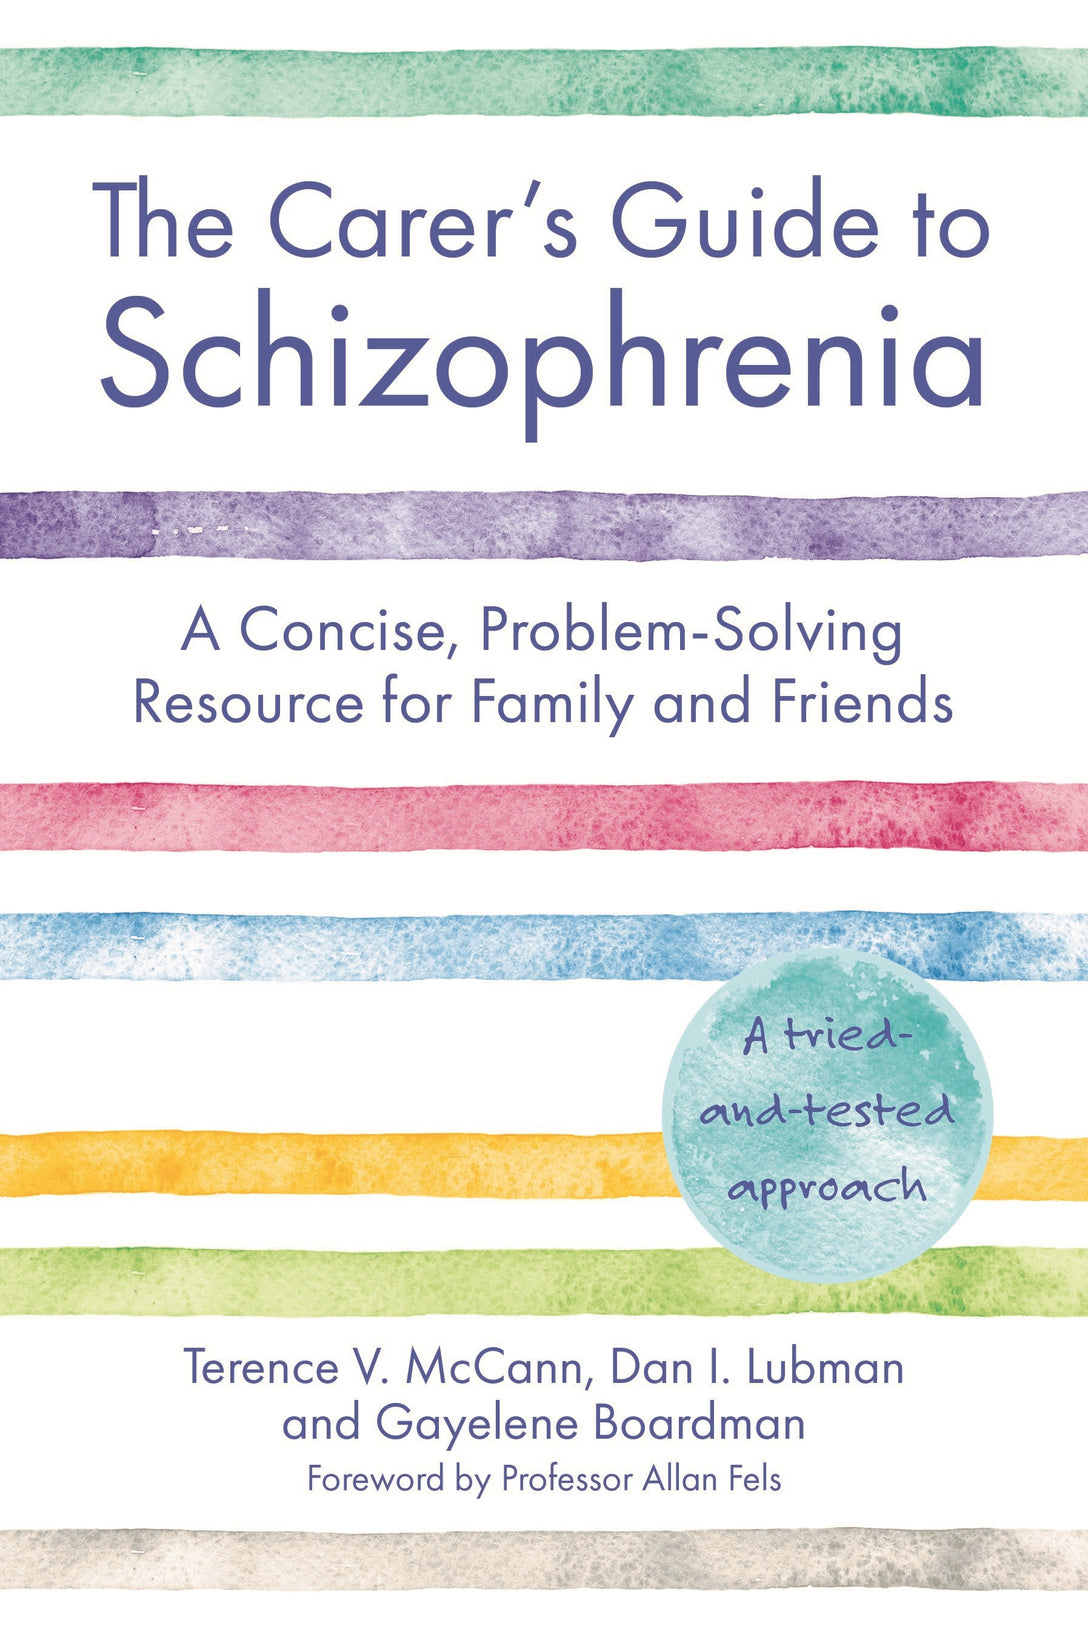 The Carer's Guide to Schizophrenia by Terence McCann, Dan Lubman, Gayelene Boardman